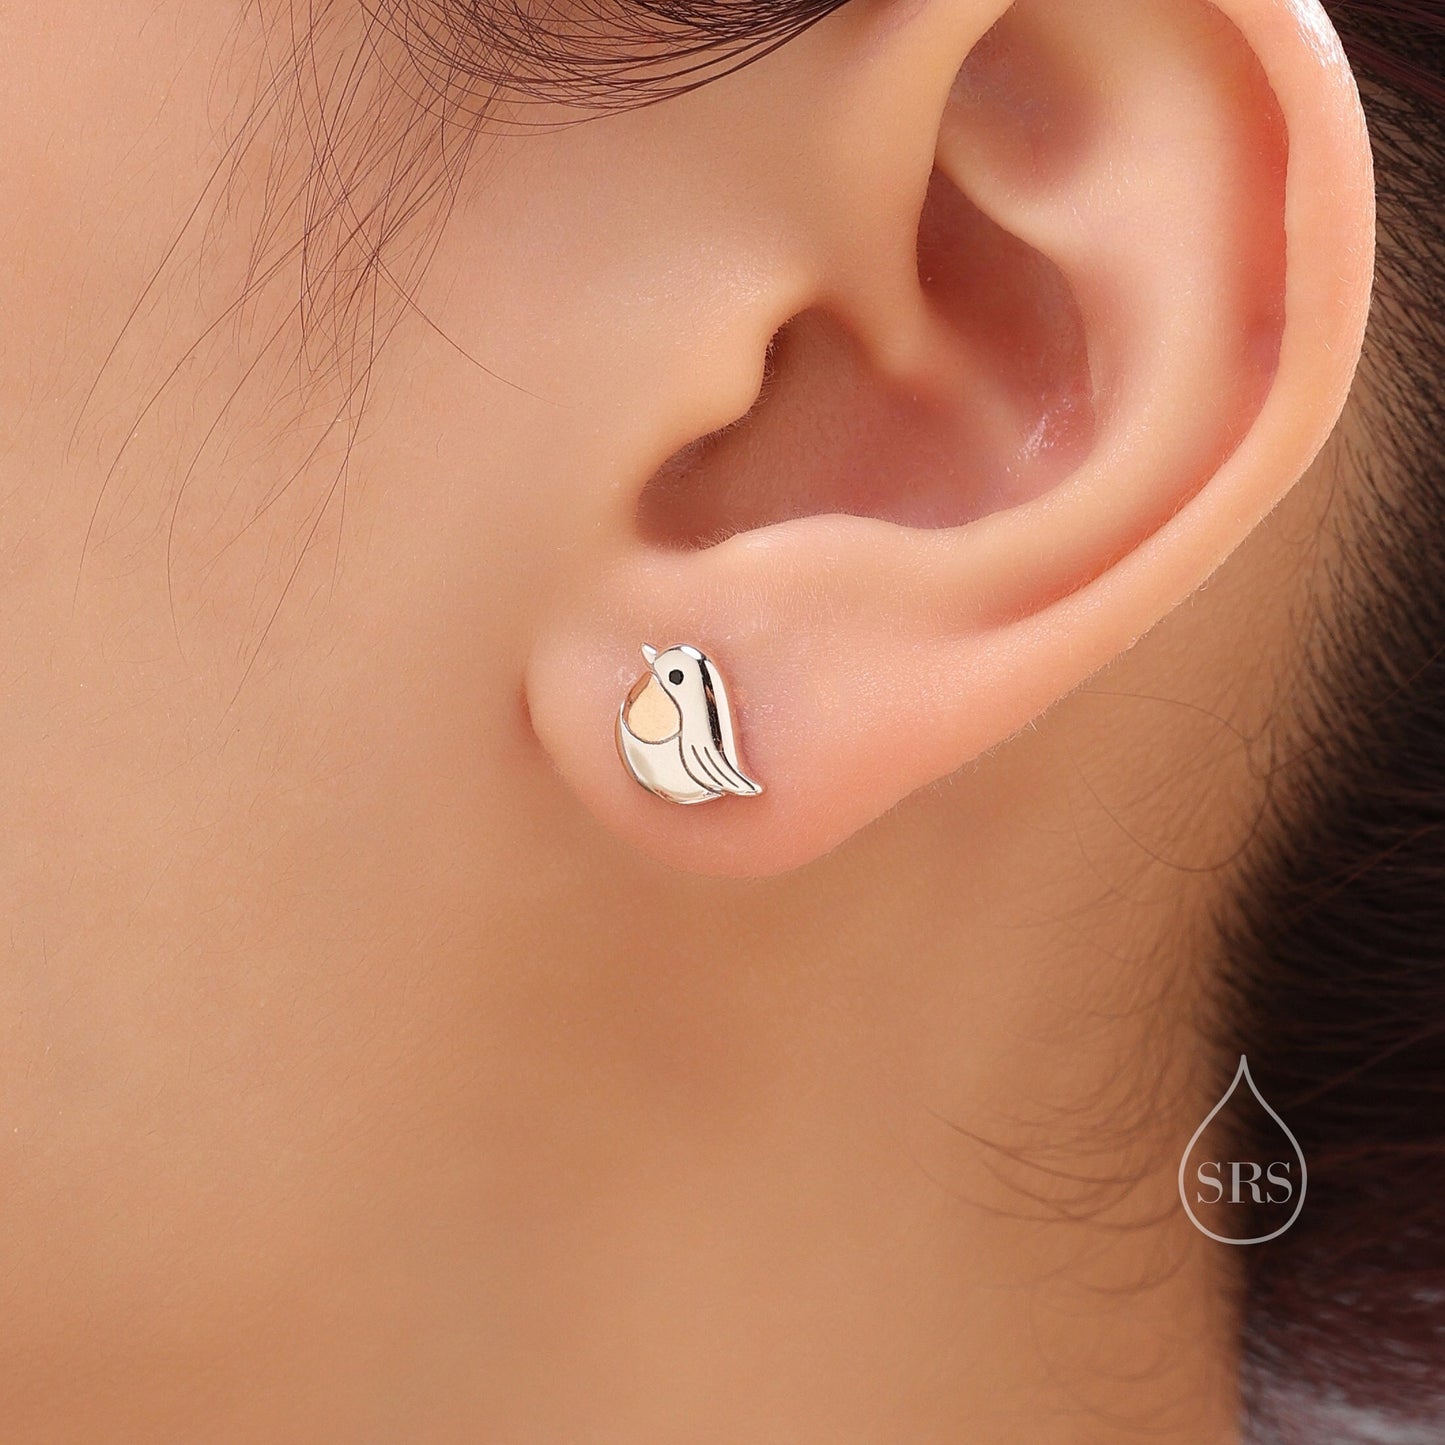 Tiny Robin Bird Stud Earrings in Sterling Silver, Two Tone Coating, British Bird Earrings, Nature Inspired Animal Earrings